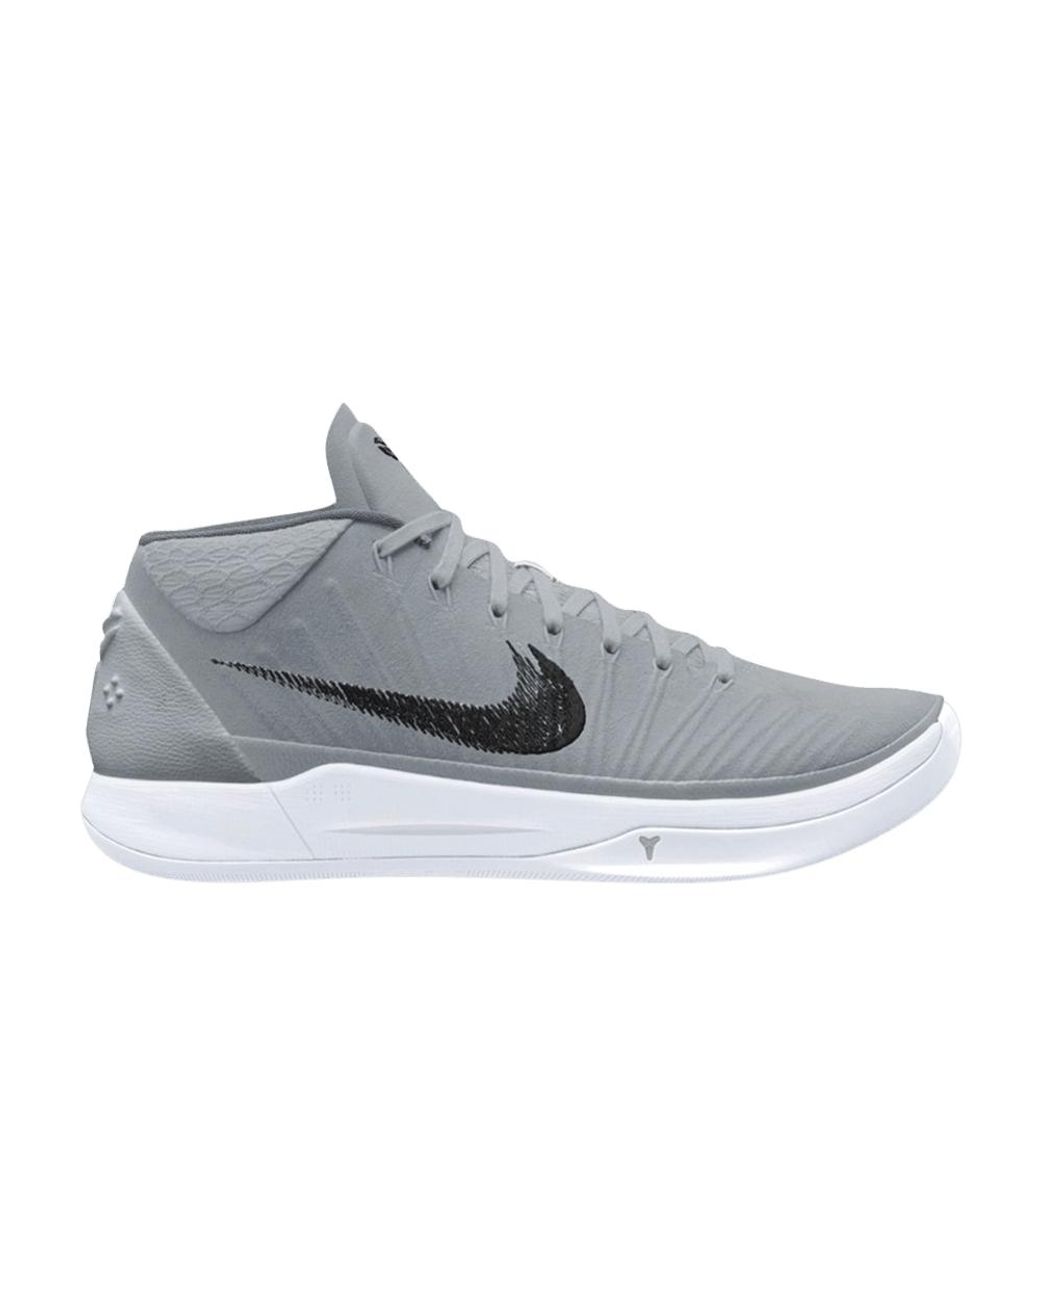 Nike Kobe A.d. Mid in Grey (Gray) for Men - Lyst